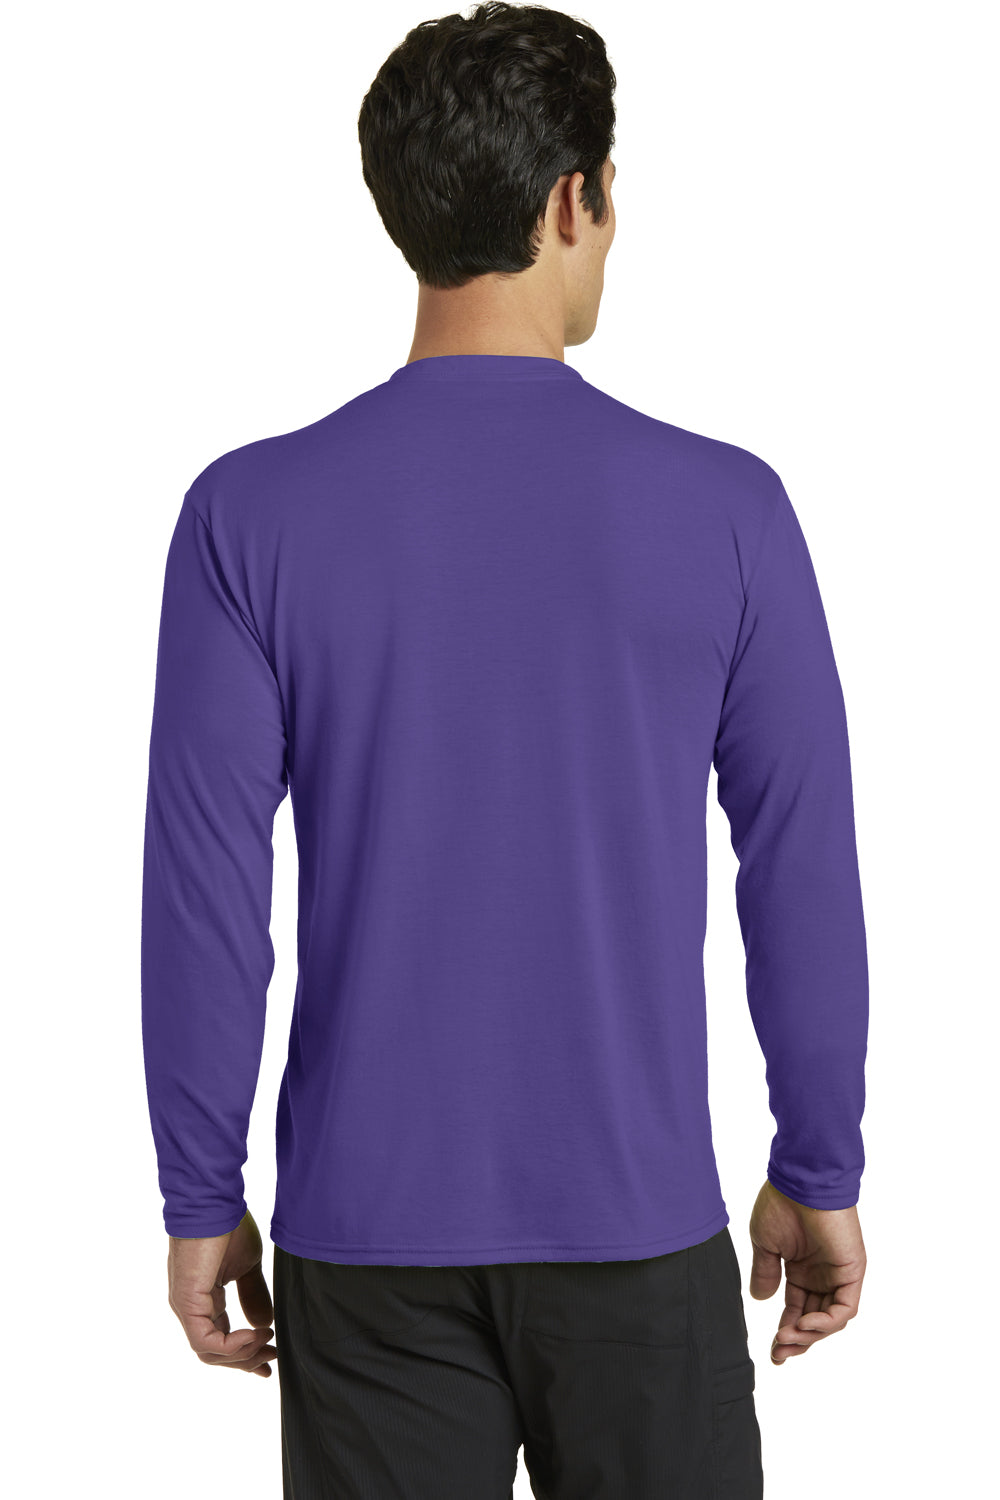 Port & Company PC381LS Mens Dry Zone Performance Moisture Wicking Long Sleeve Crewneck T-Shirt Purple Back